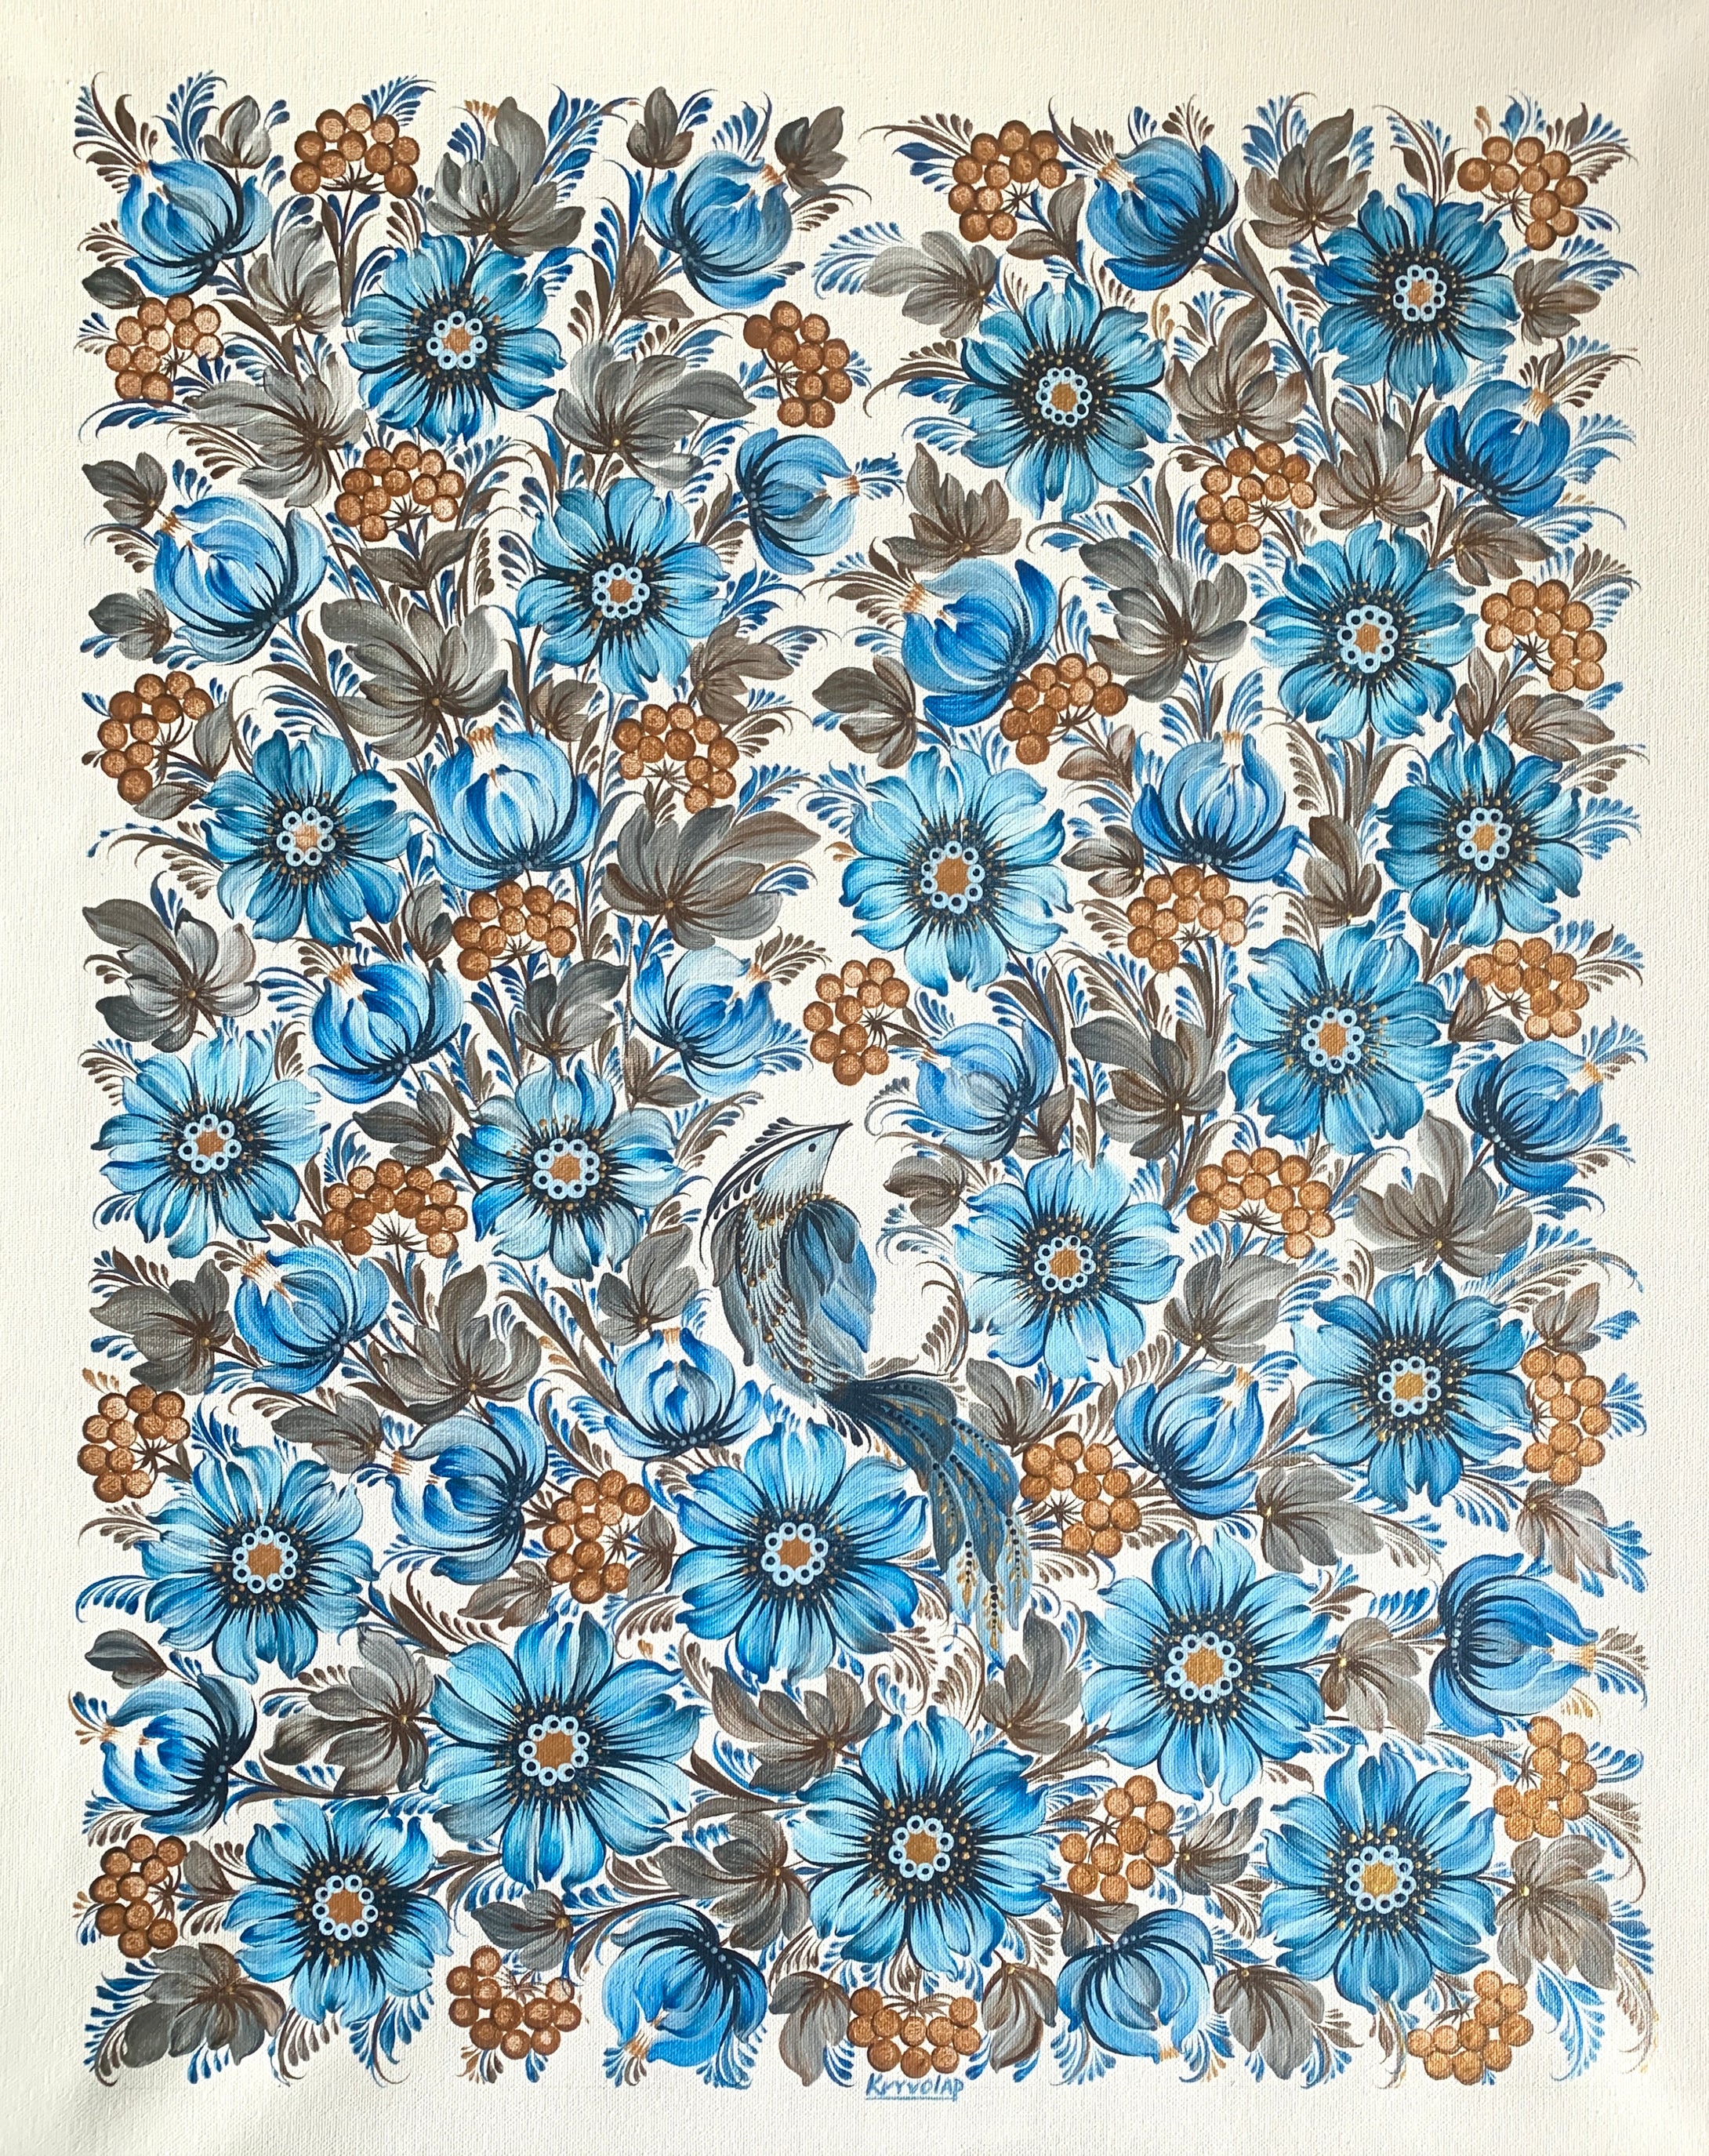 BLUE GARDEN -  - 24 in x 30 in (61 cm x 76.2 cm)